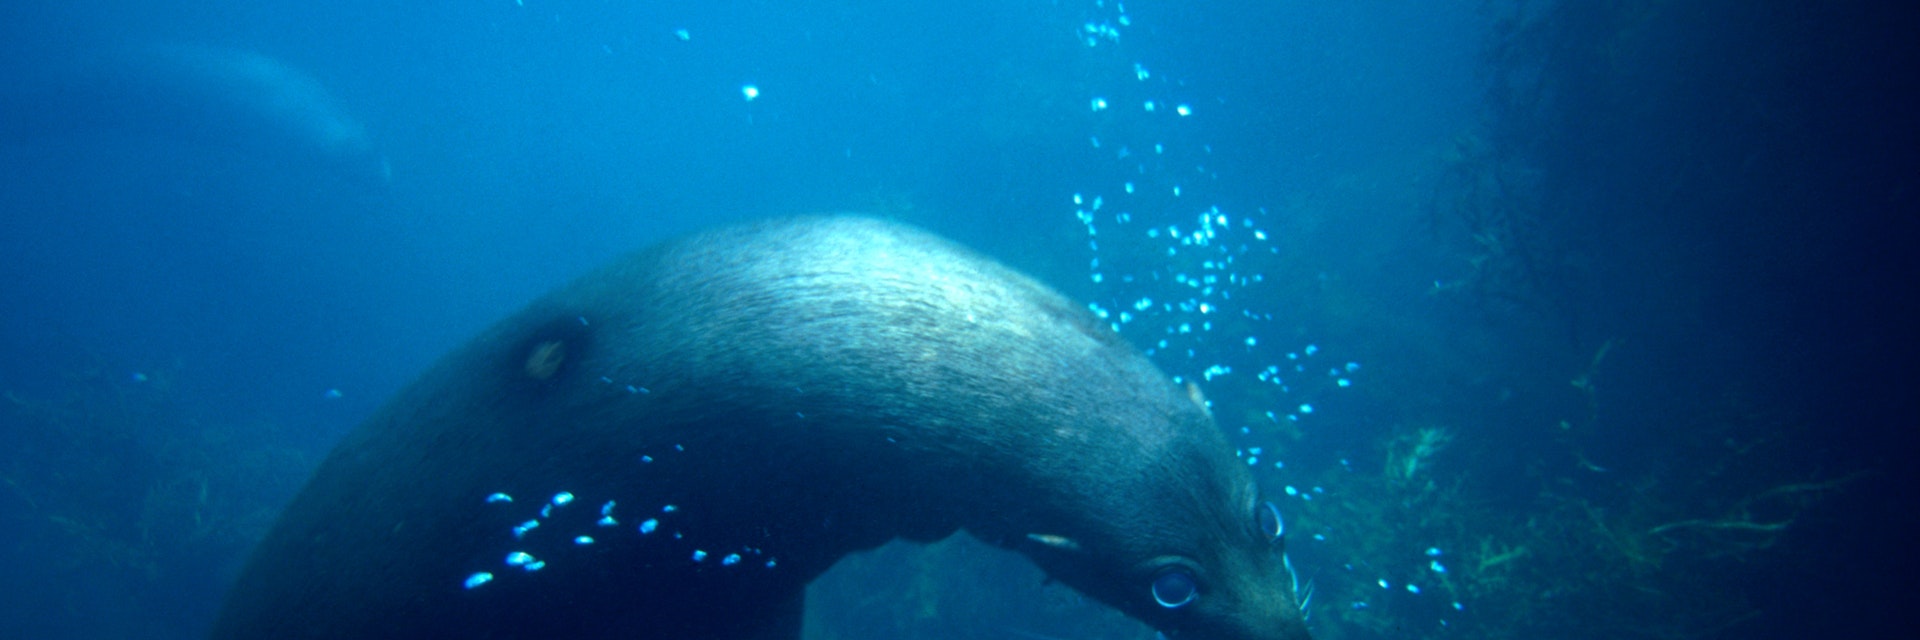 Fur seal swimming underwater.